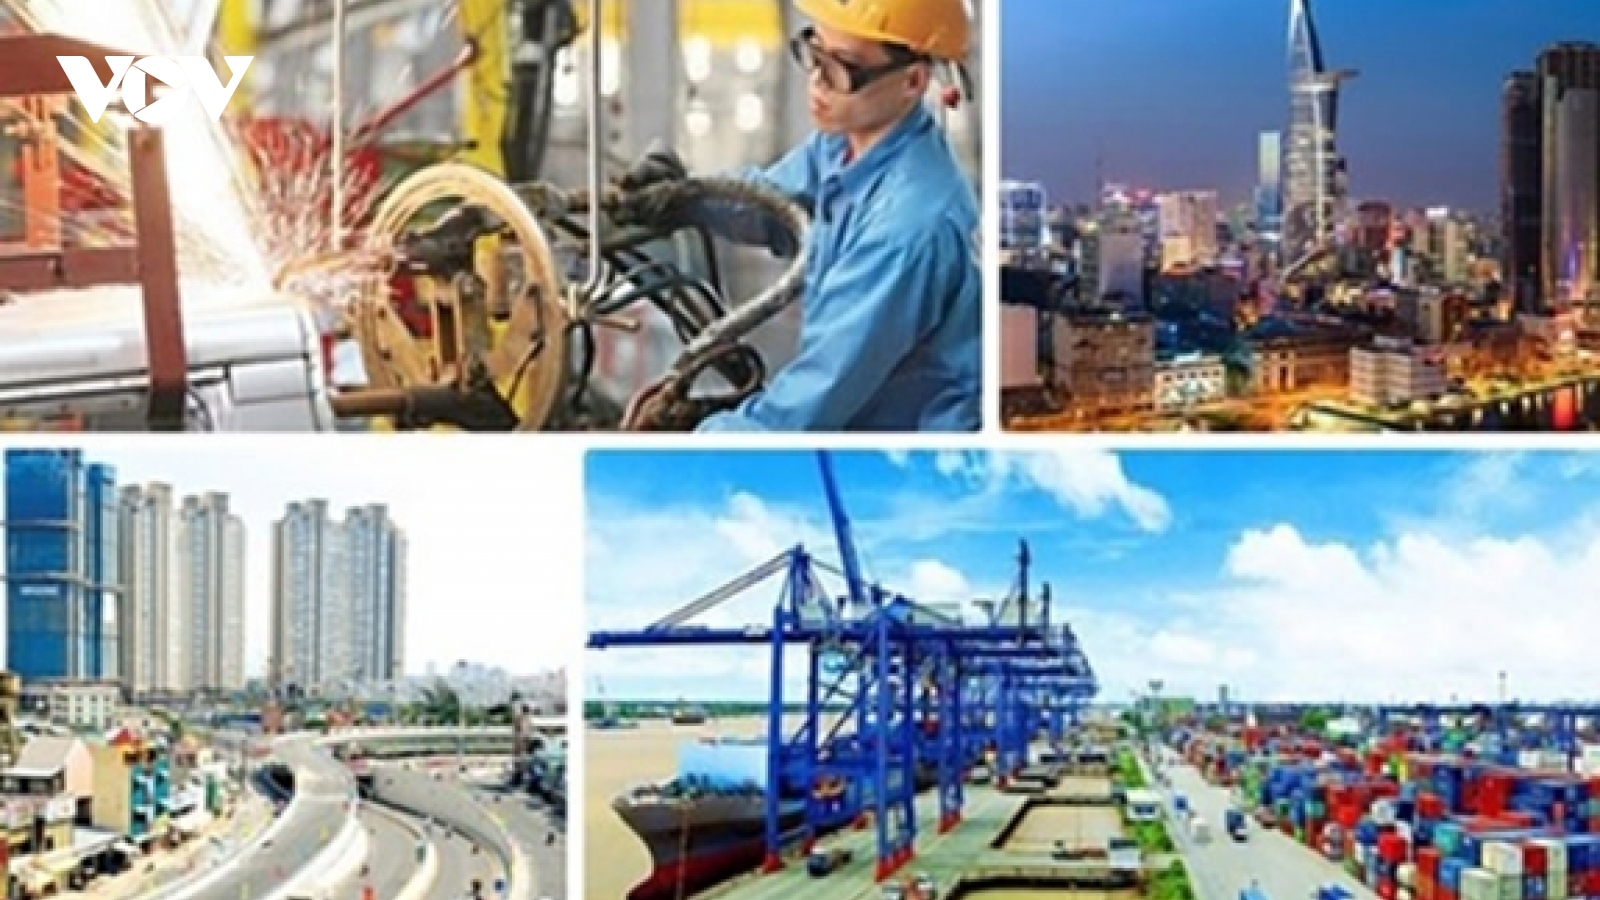 Bangkok Post notes Vietnam as investment destination despite COVID-19